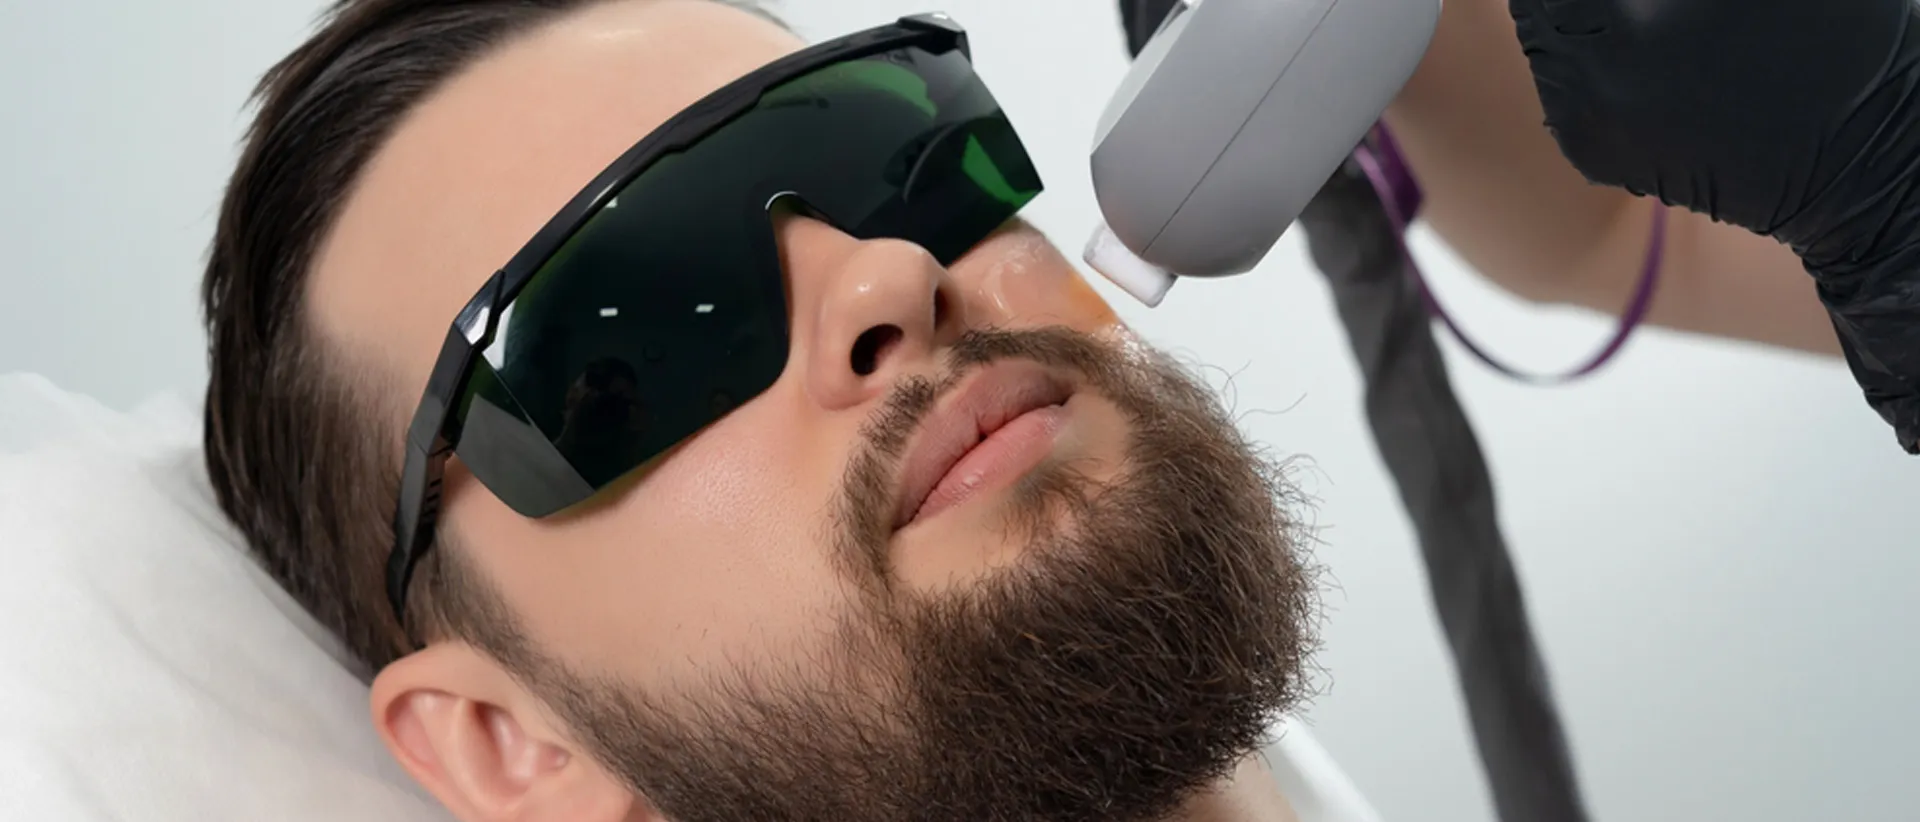 Man getting laser treatment for facial hair.
